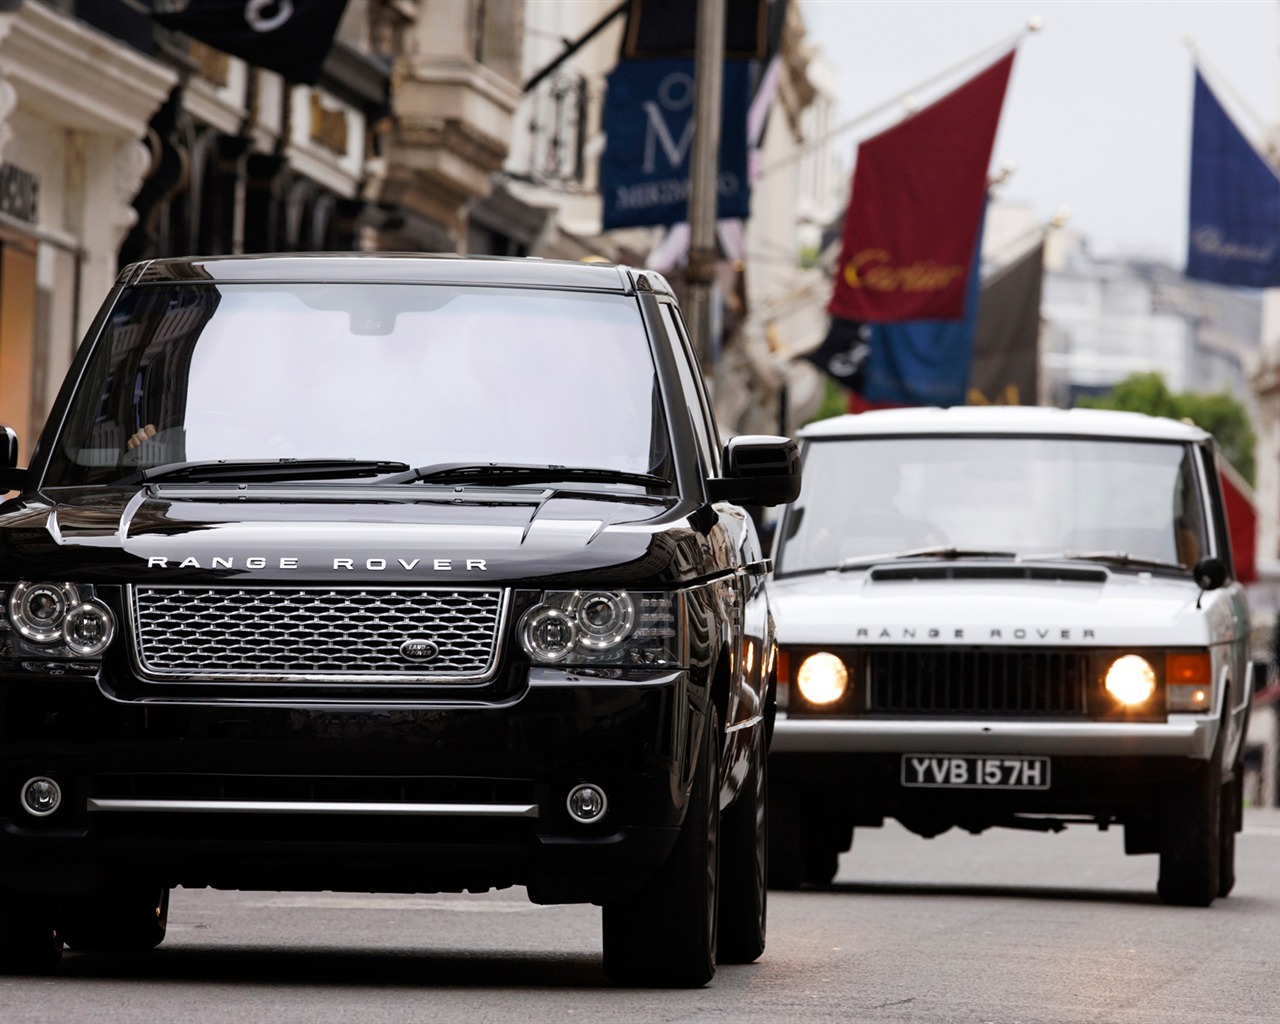 Land Rover Range Rover Black Edition - 2011 路虎14 - 1280x1024